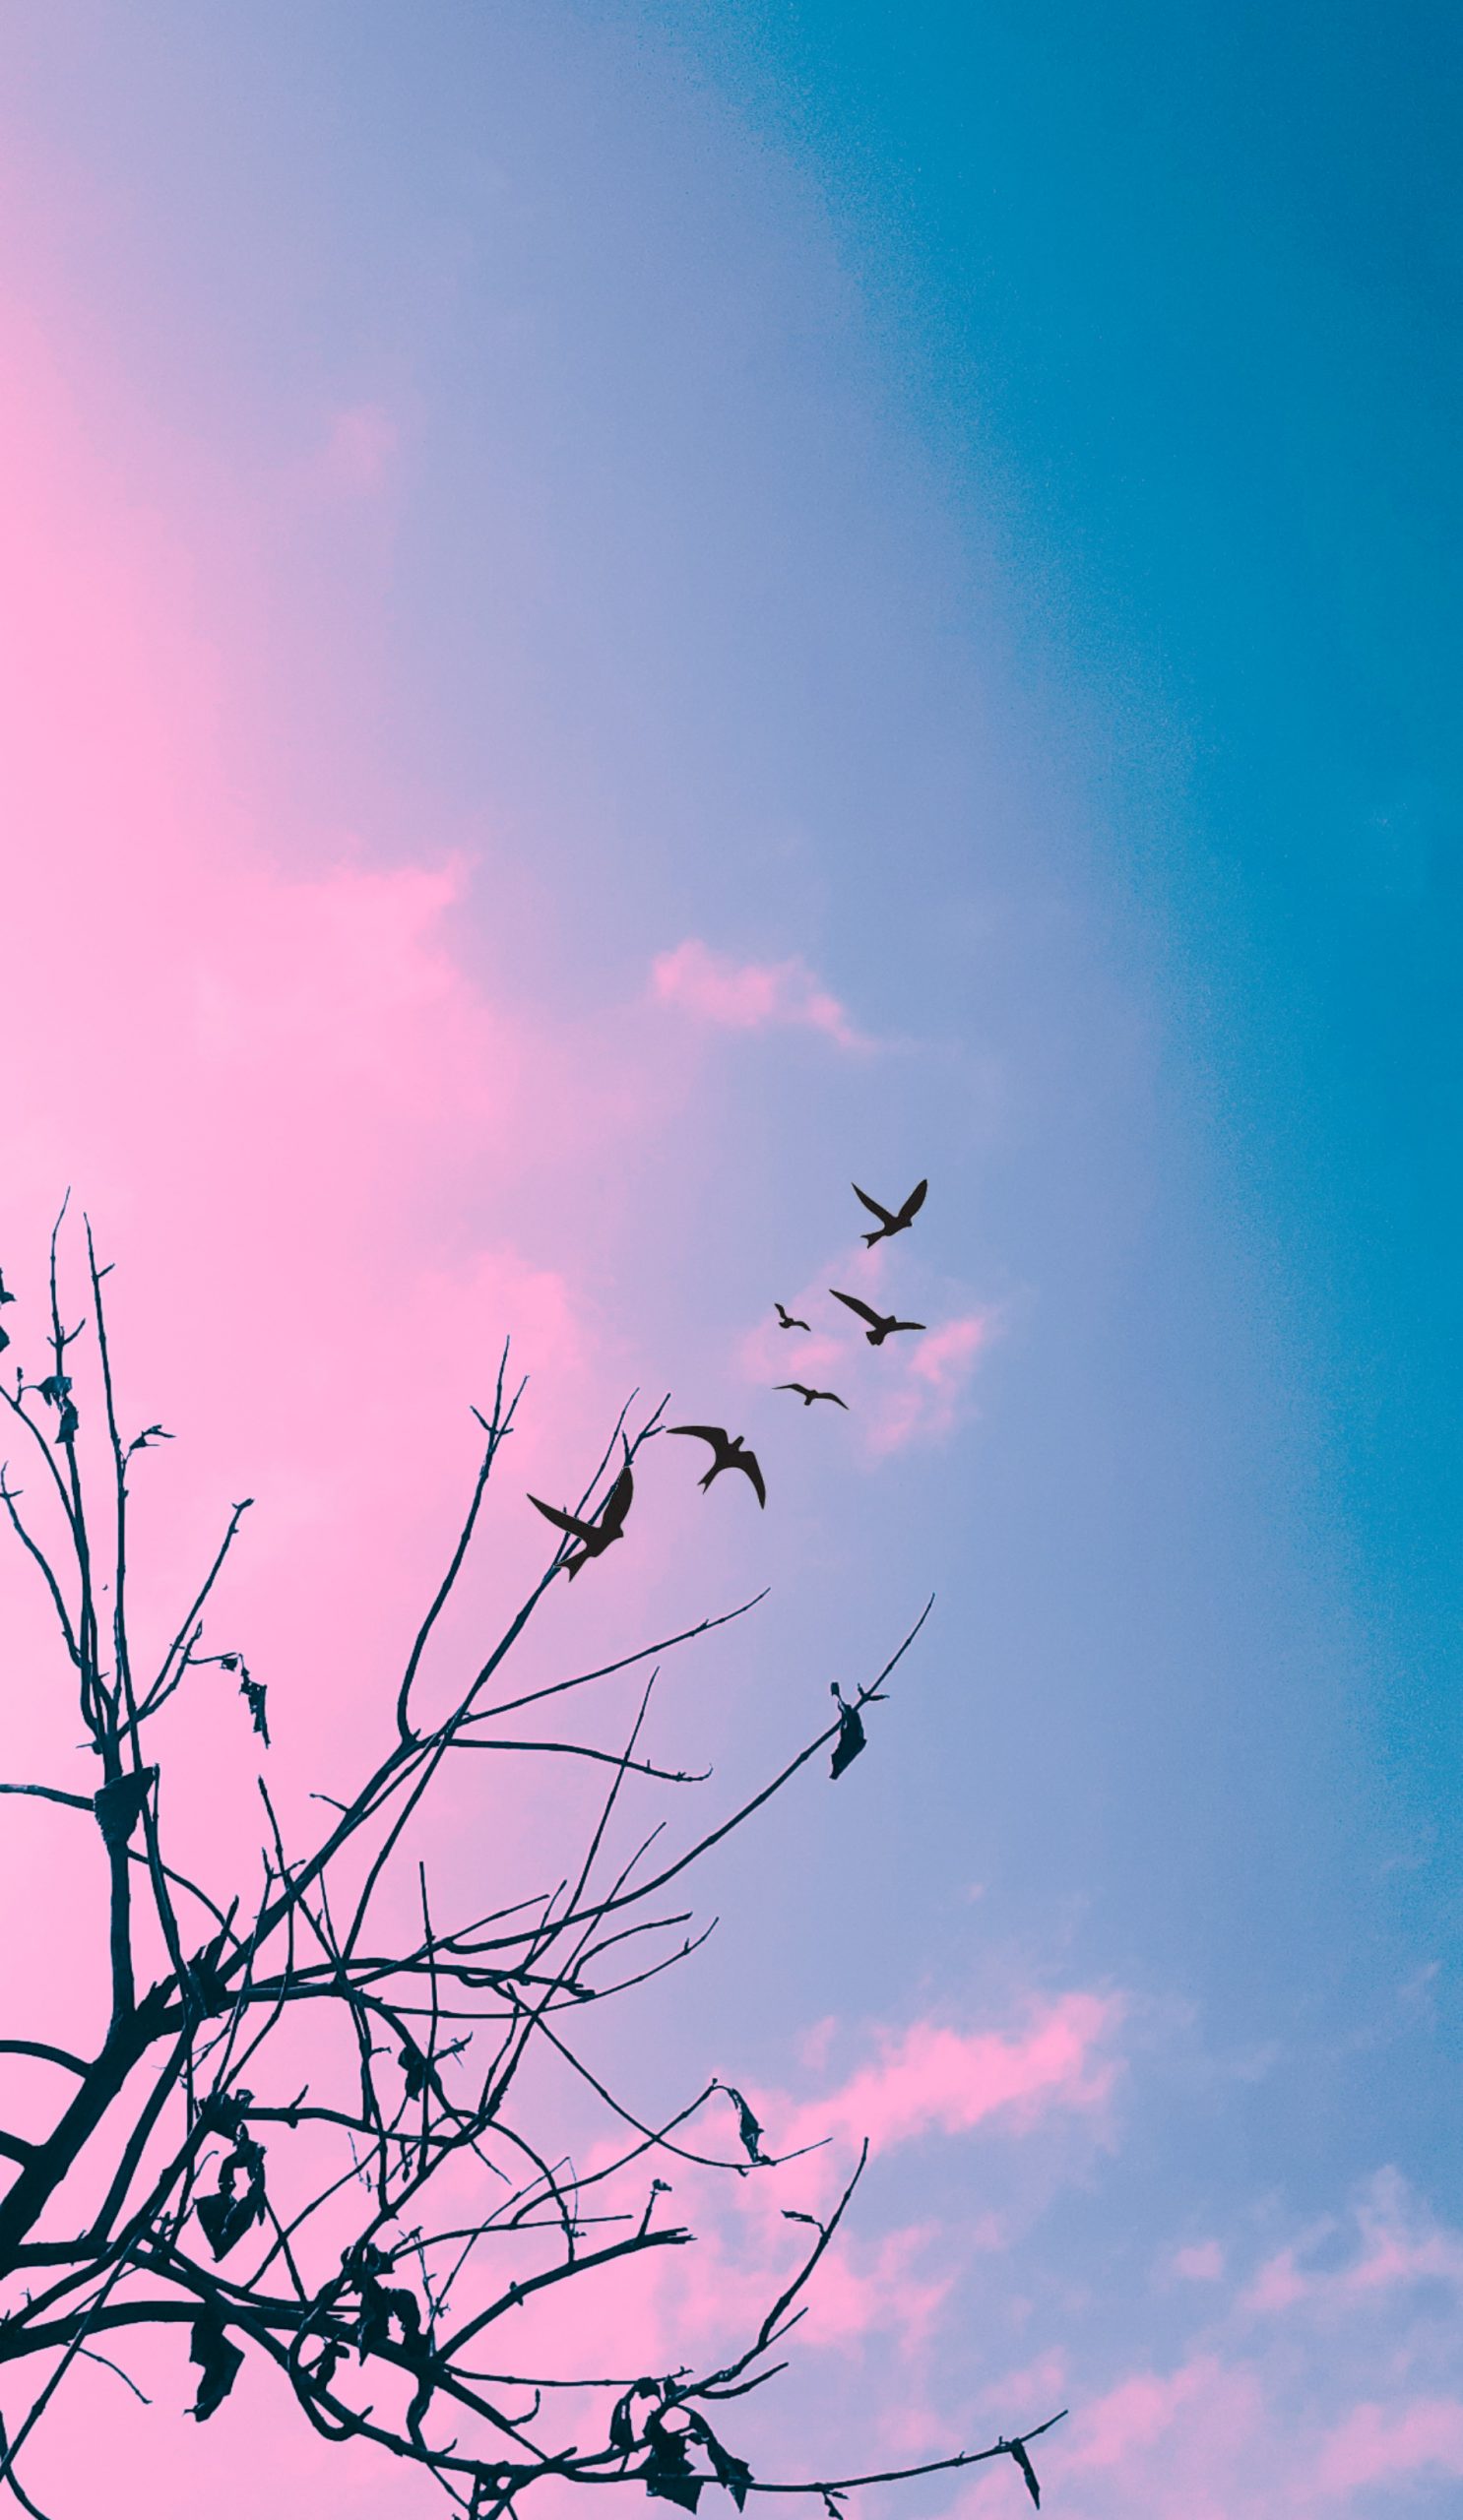 Birds and sky